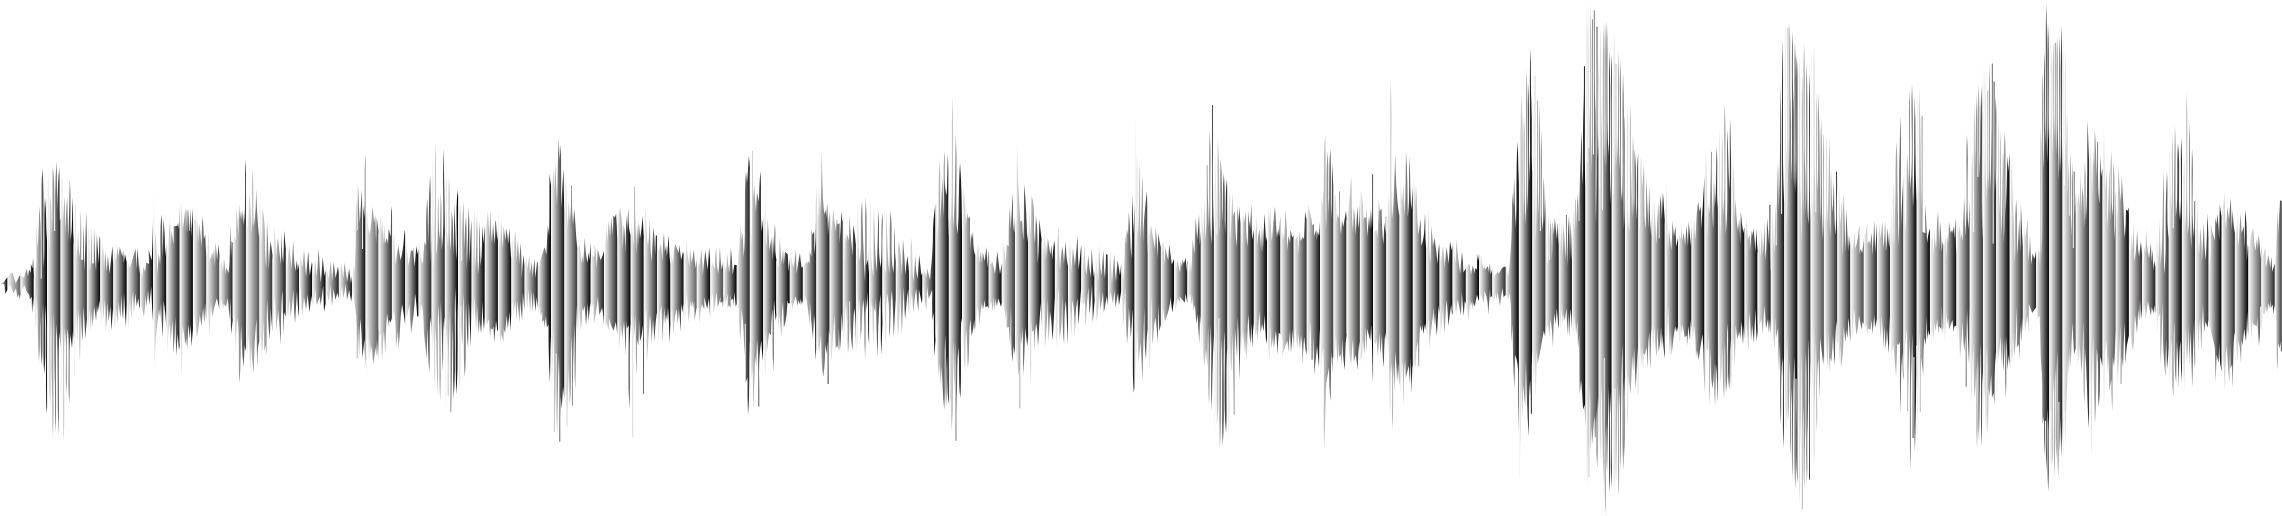 Audio Waveform Visualization